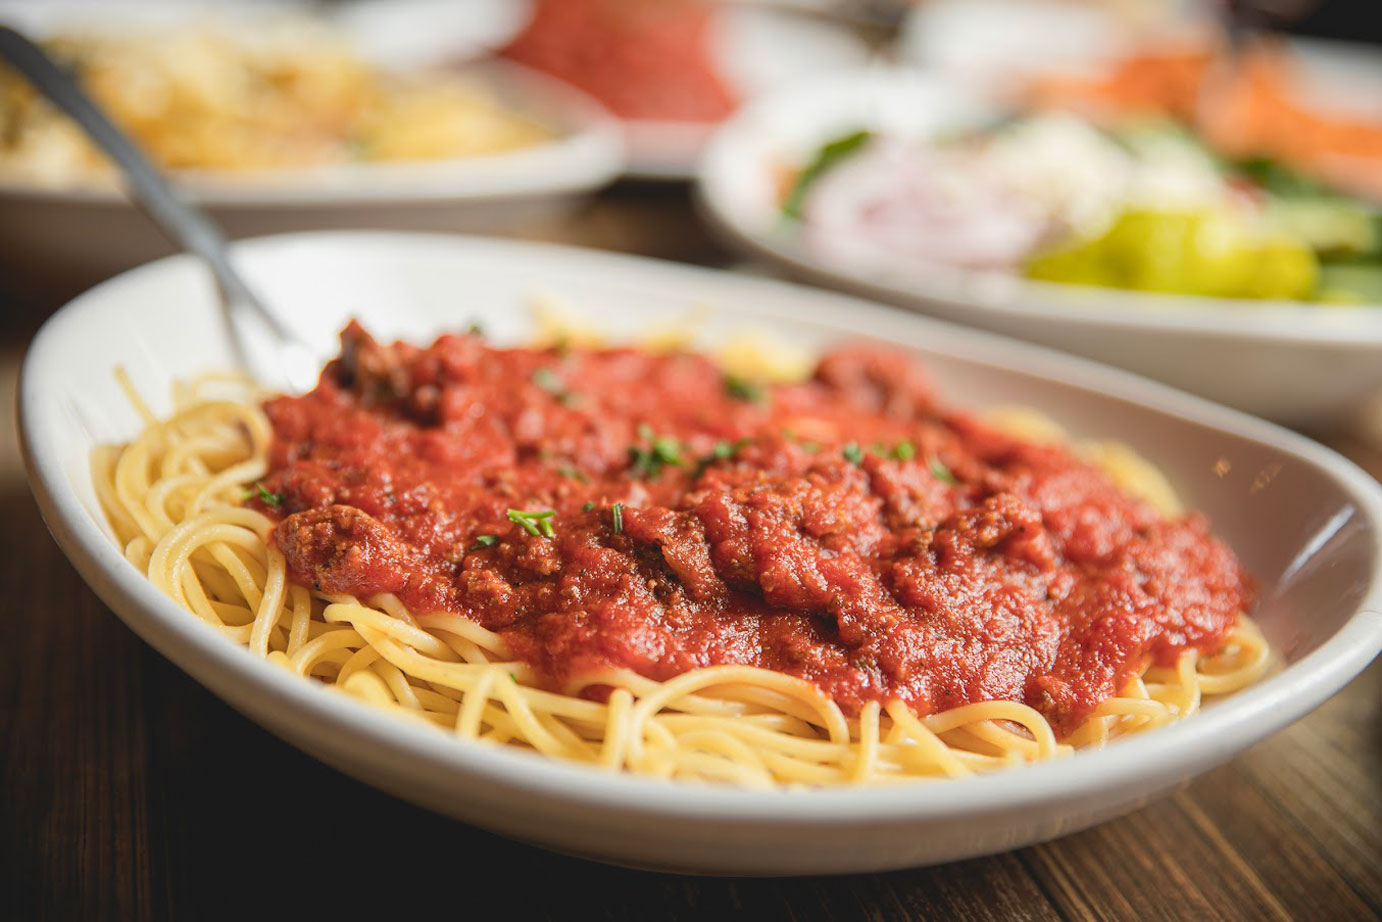 Spaghetti Bolognese, served